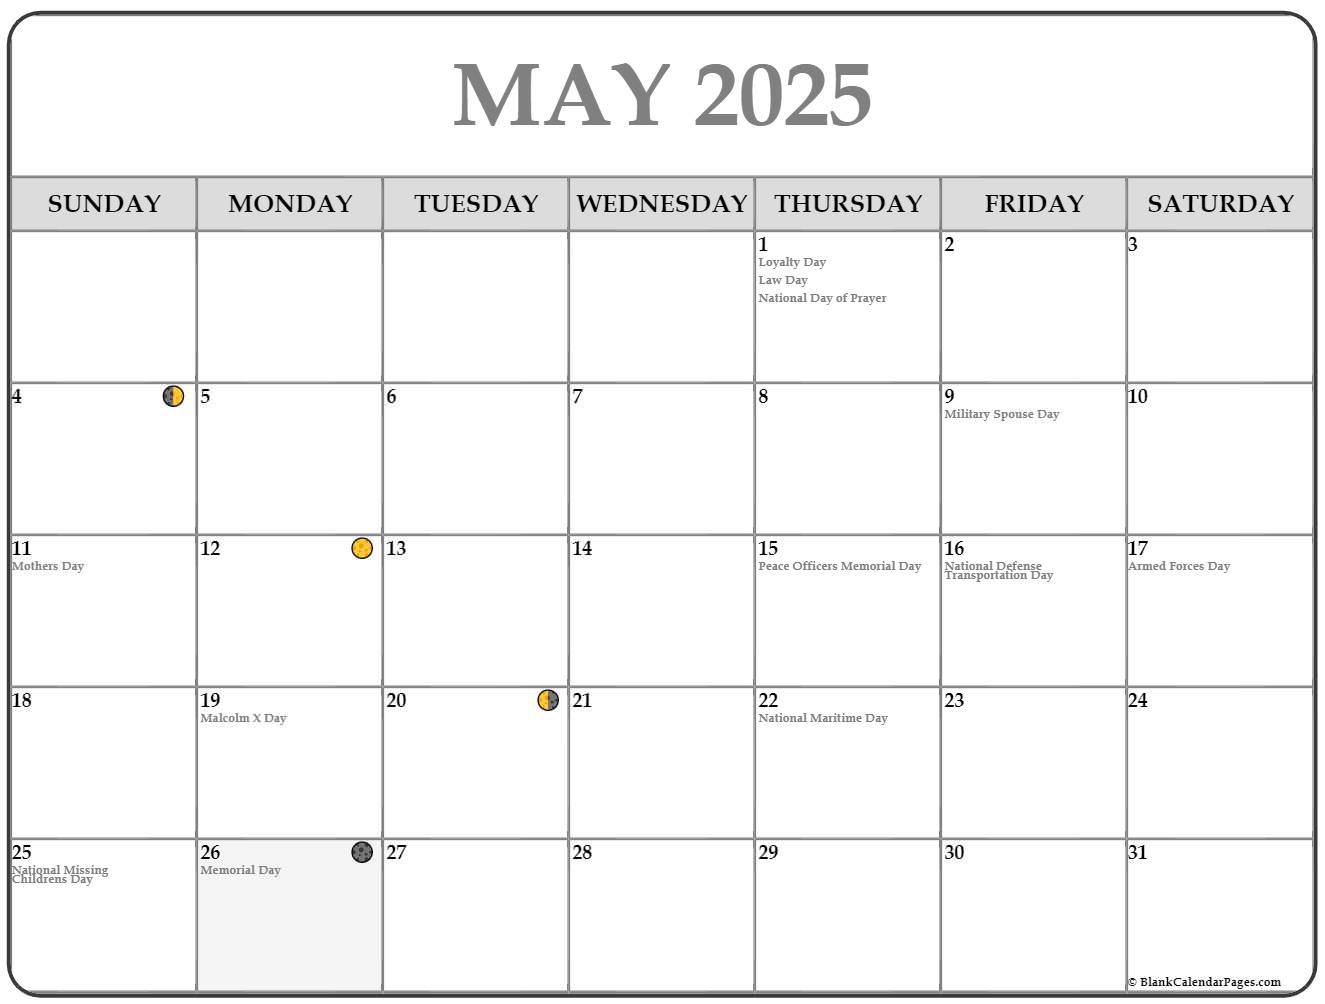 may-2025-lunar-calendar-moon-phase-calendar